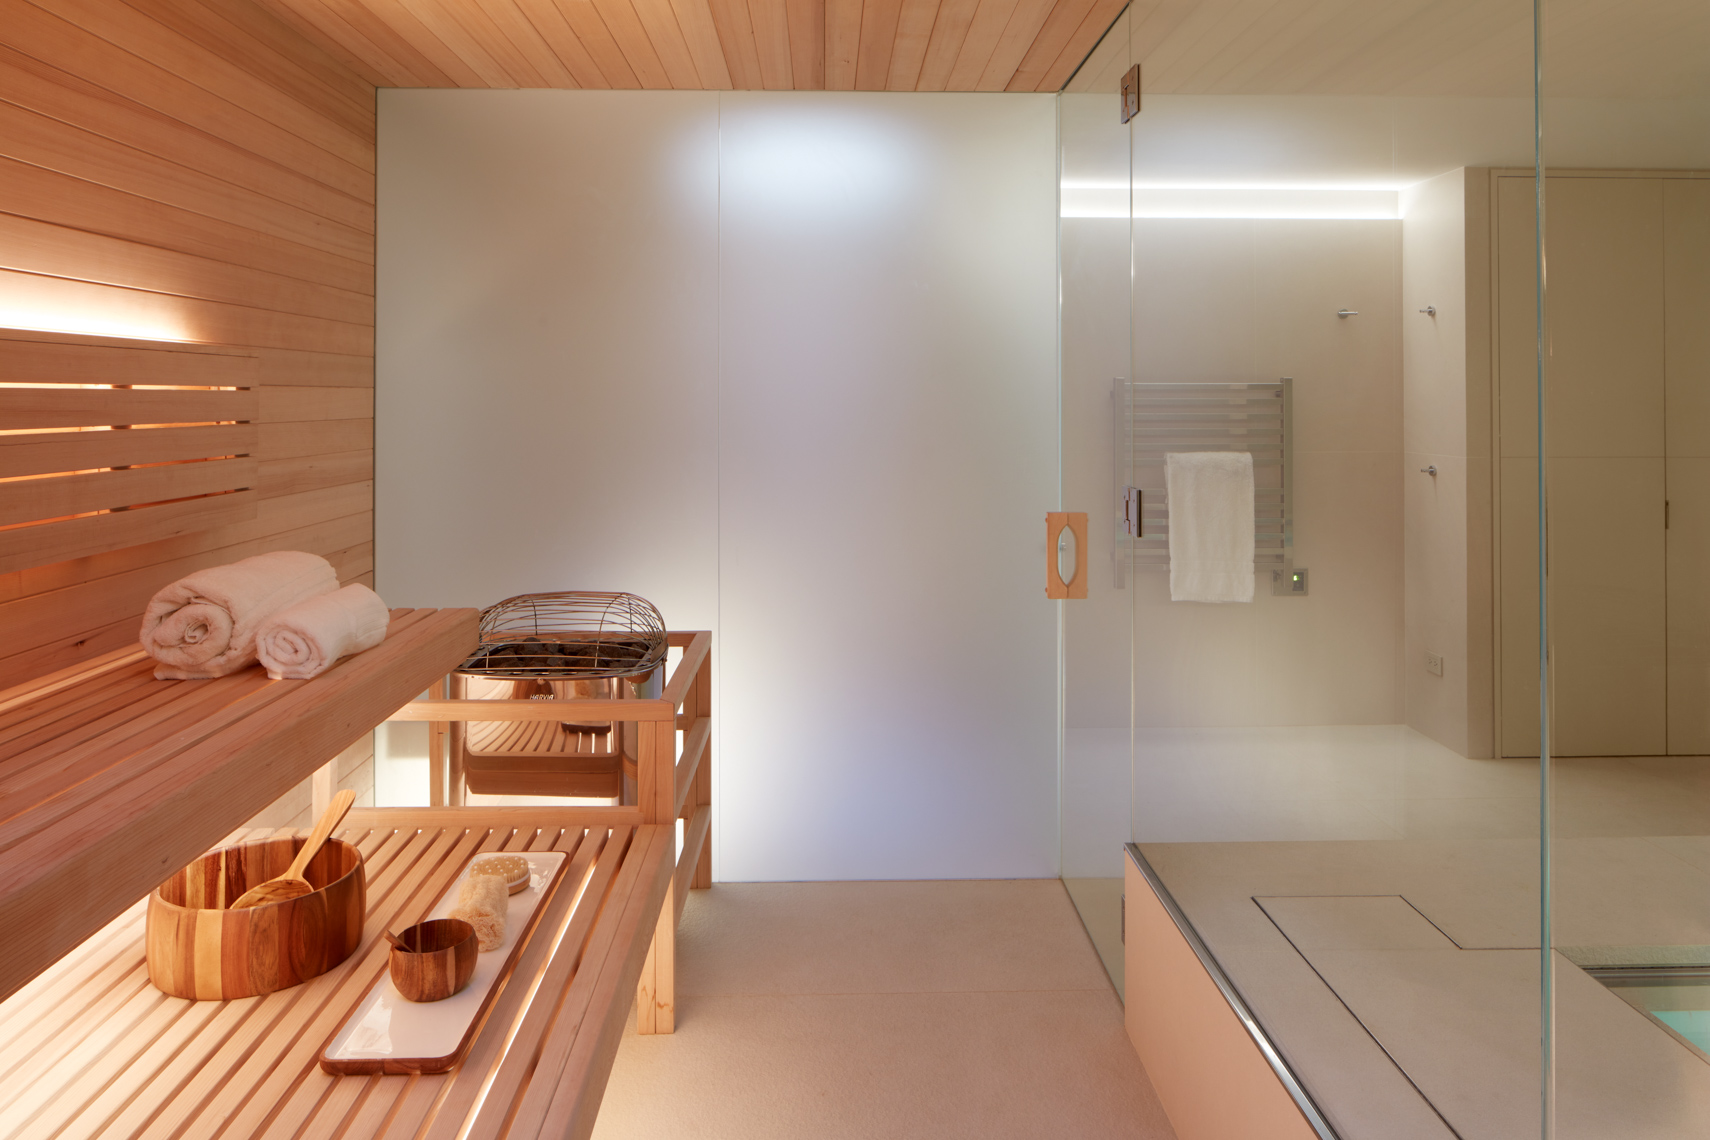 Interiors of a luxury sauna